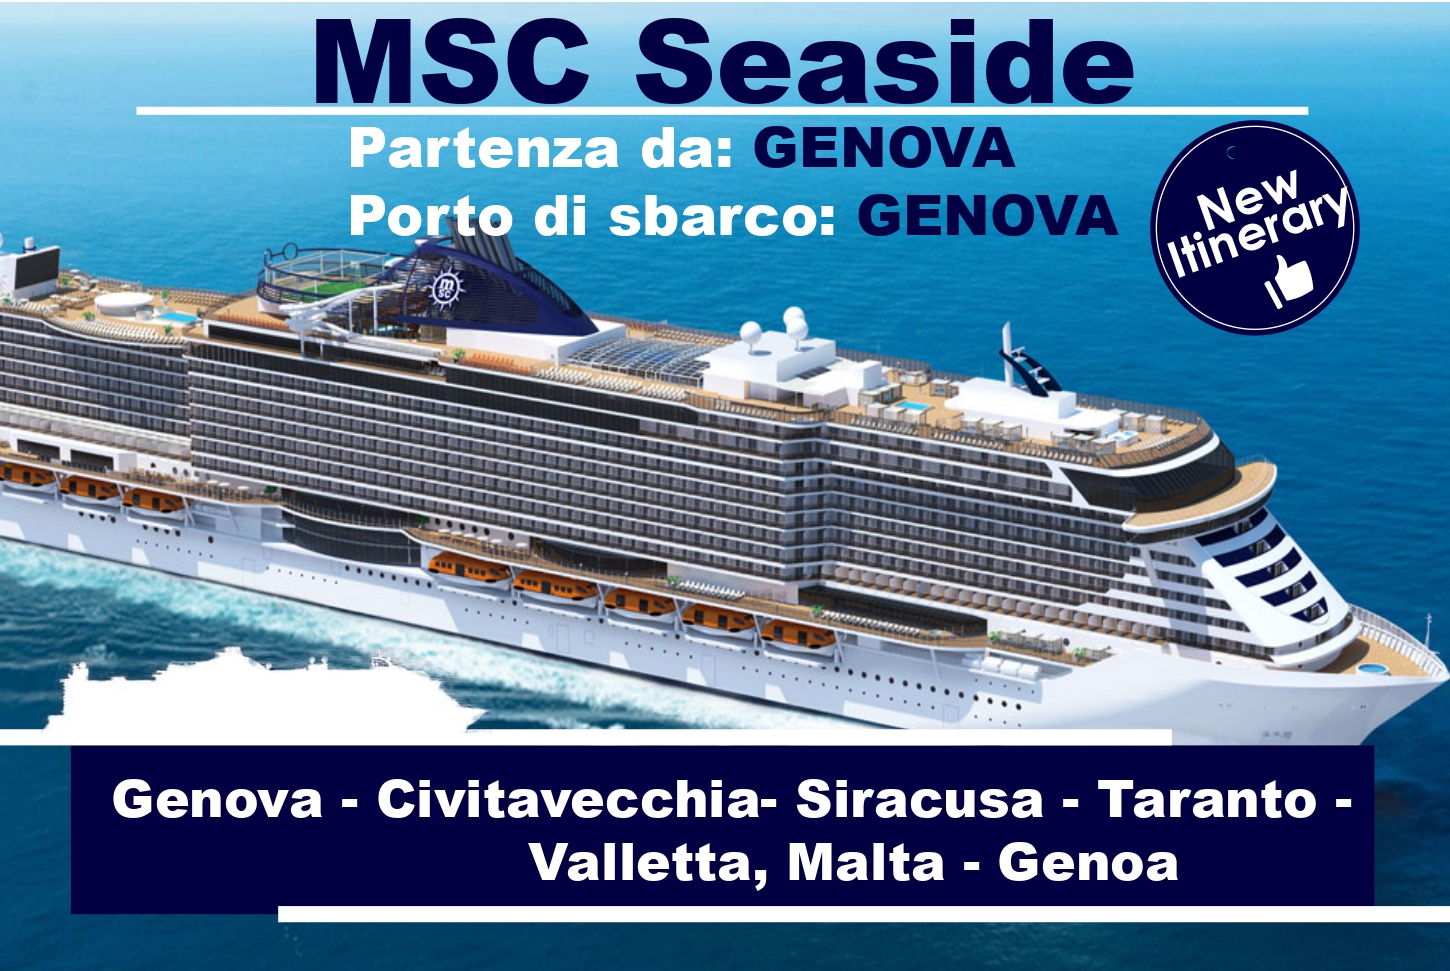 News: i nuovi itinerari MSC includeranno Taranto e Siracusa